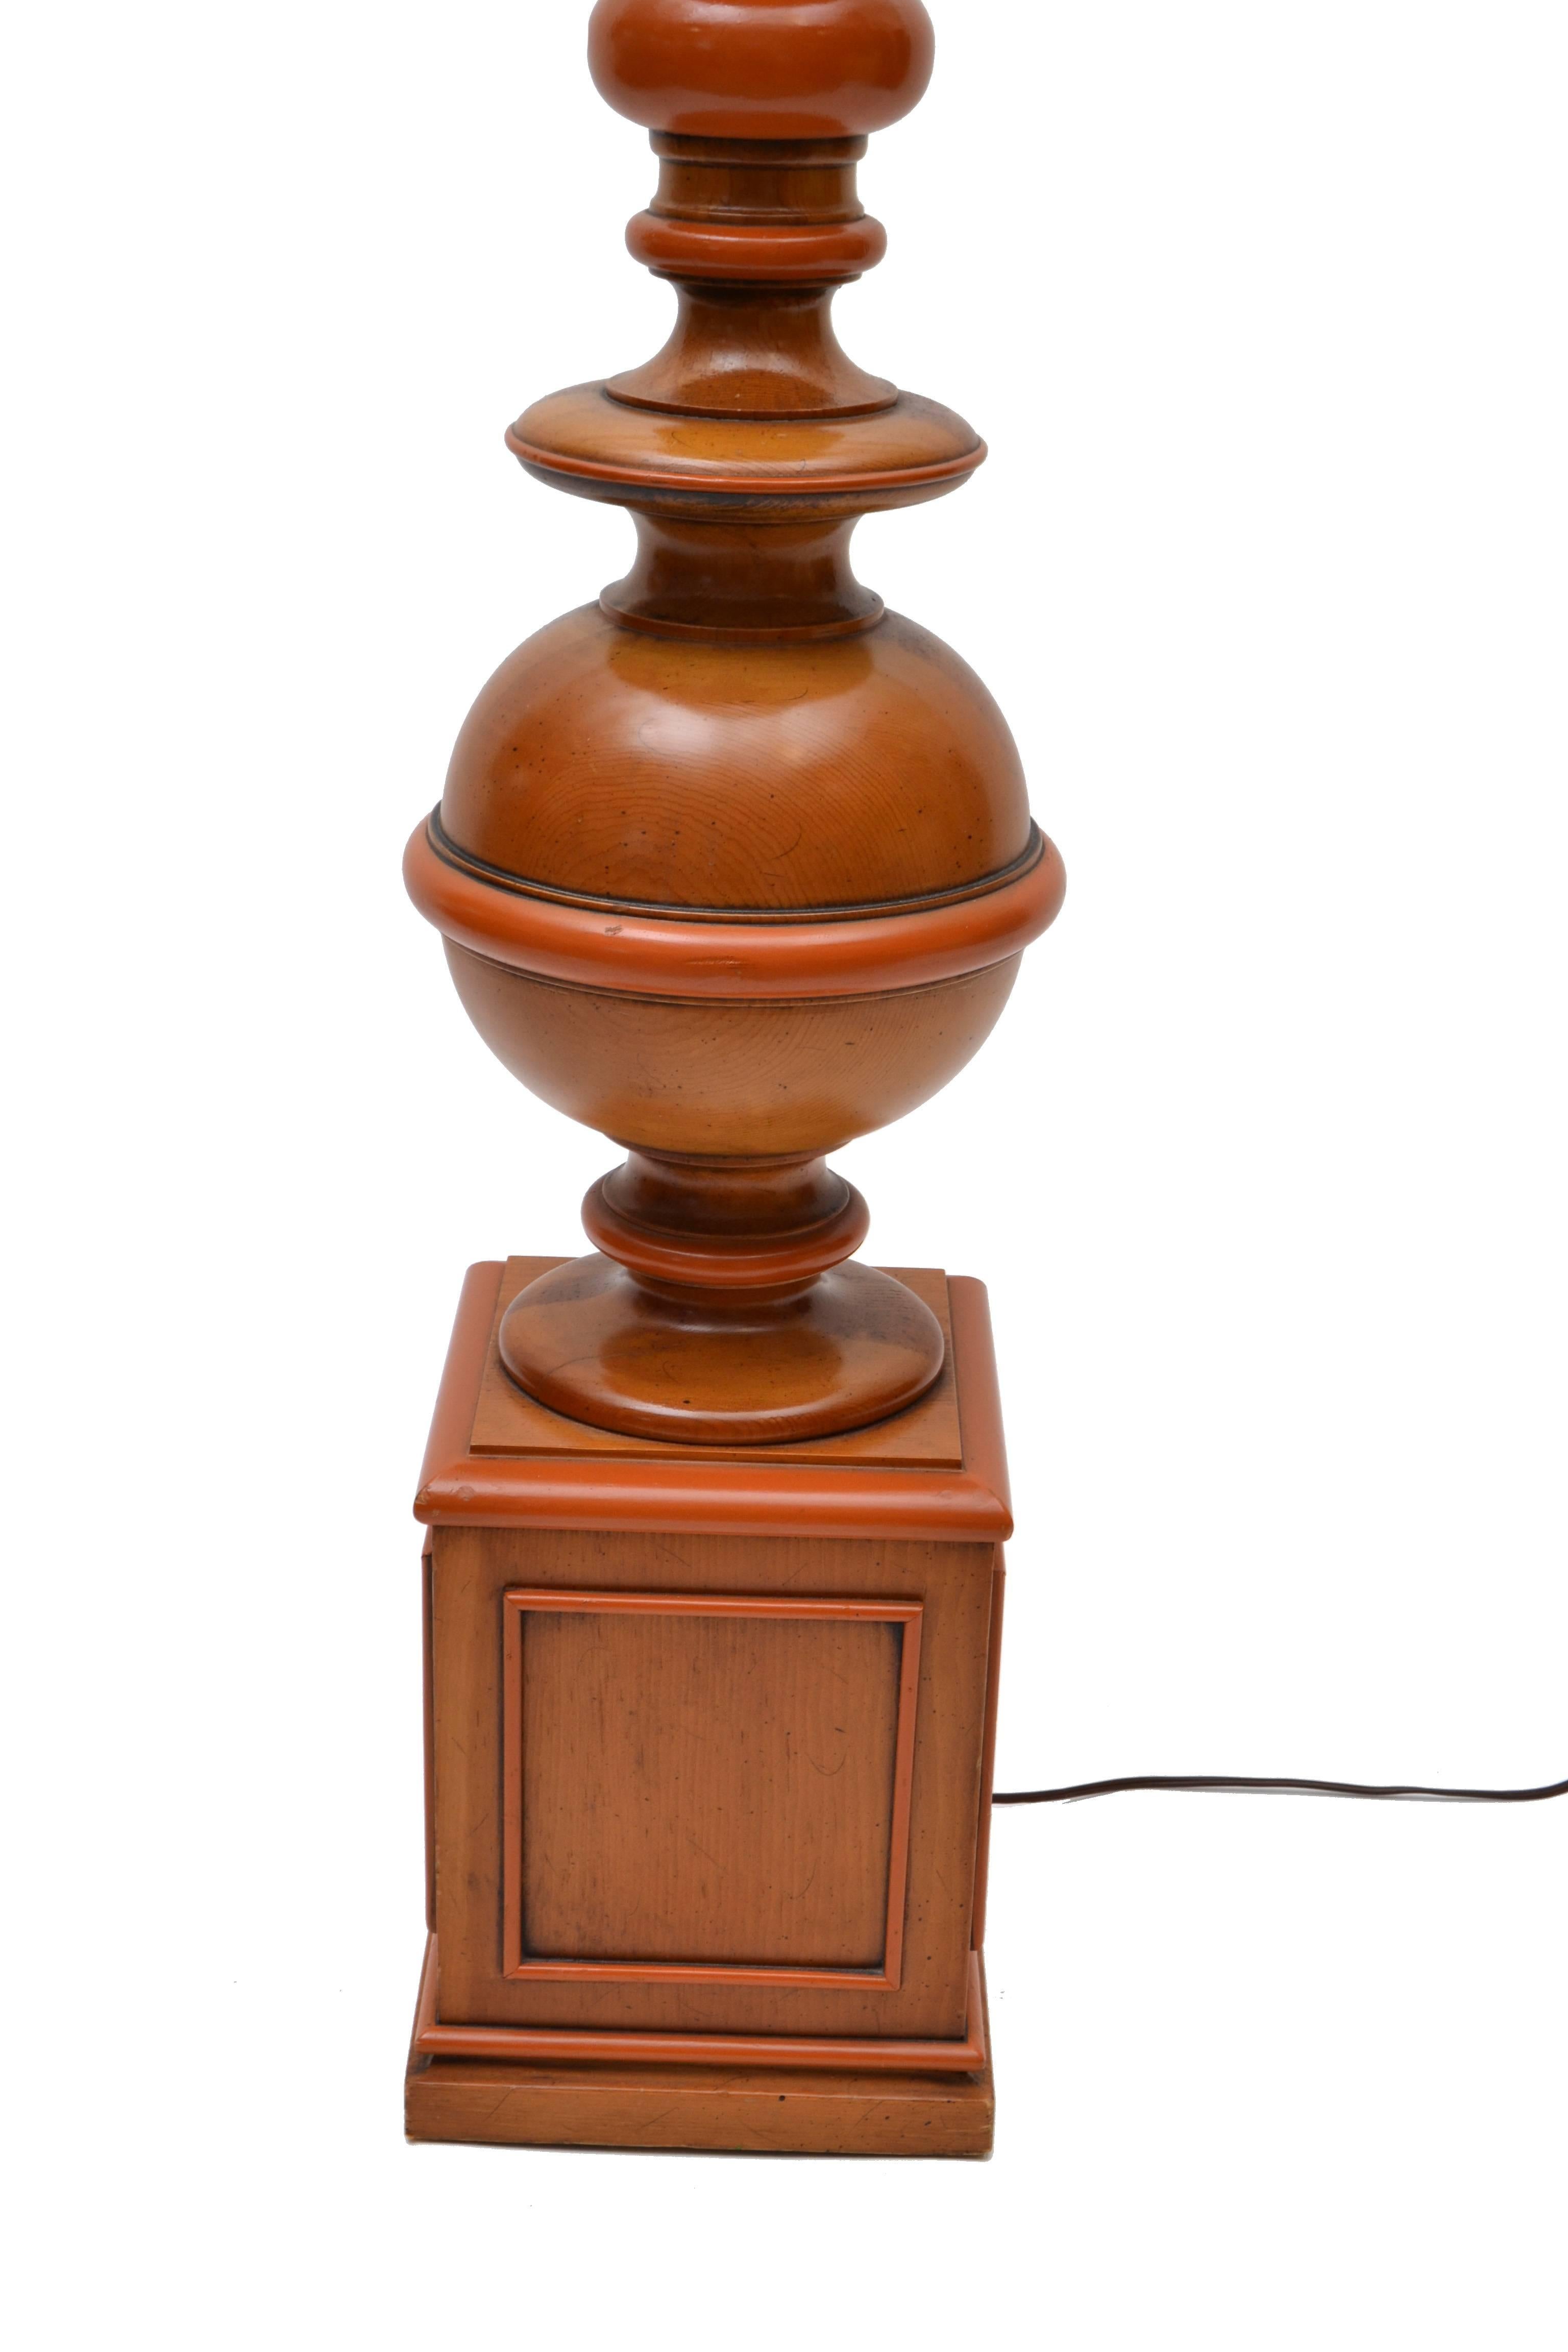 American Mid-20th Century Regency Turned Wooden Knob Creek of Morganton Floor Lamp Shade For Sale